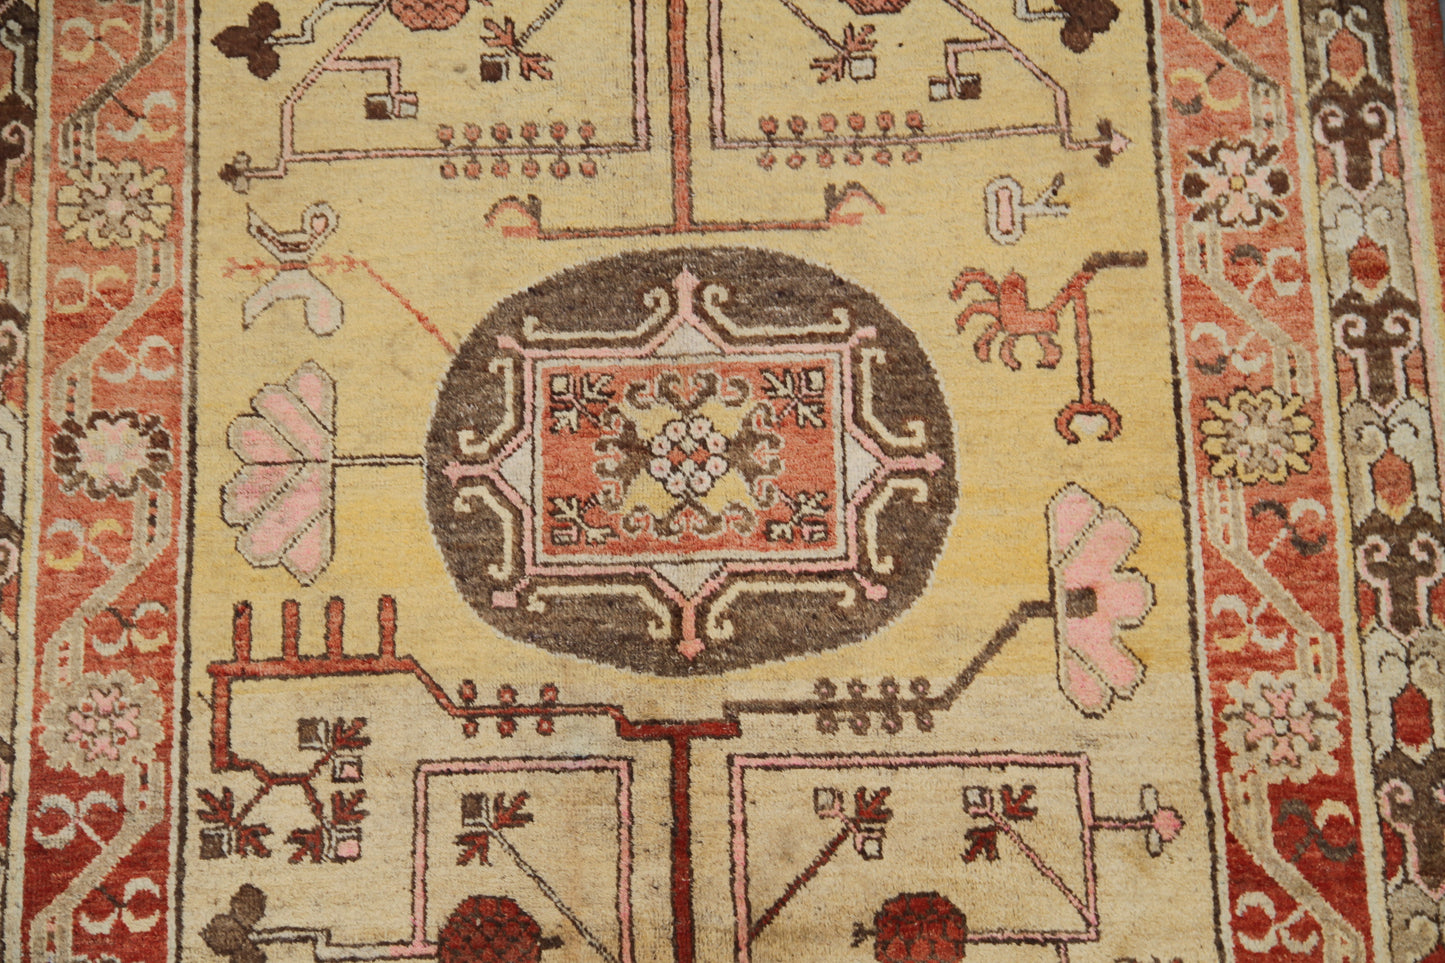 9.03 x 5.01 Antique Samarkand Rug